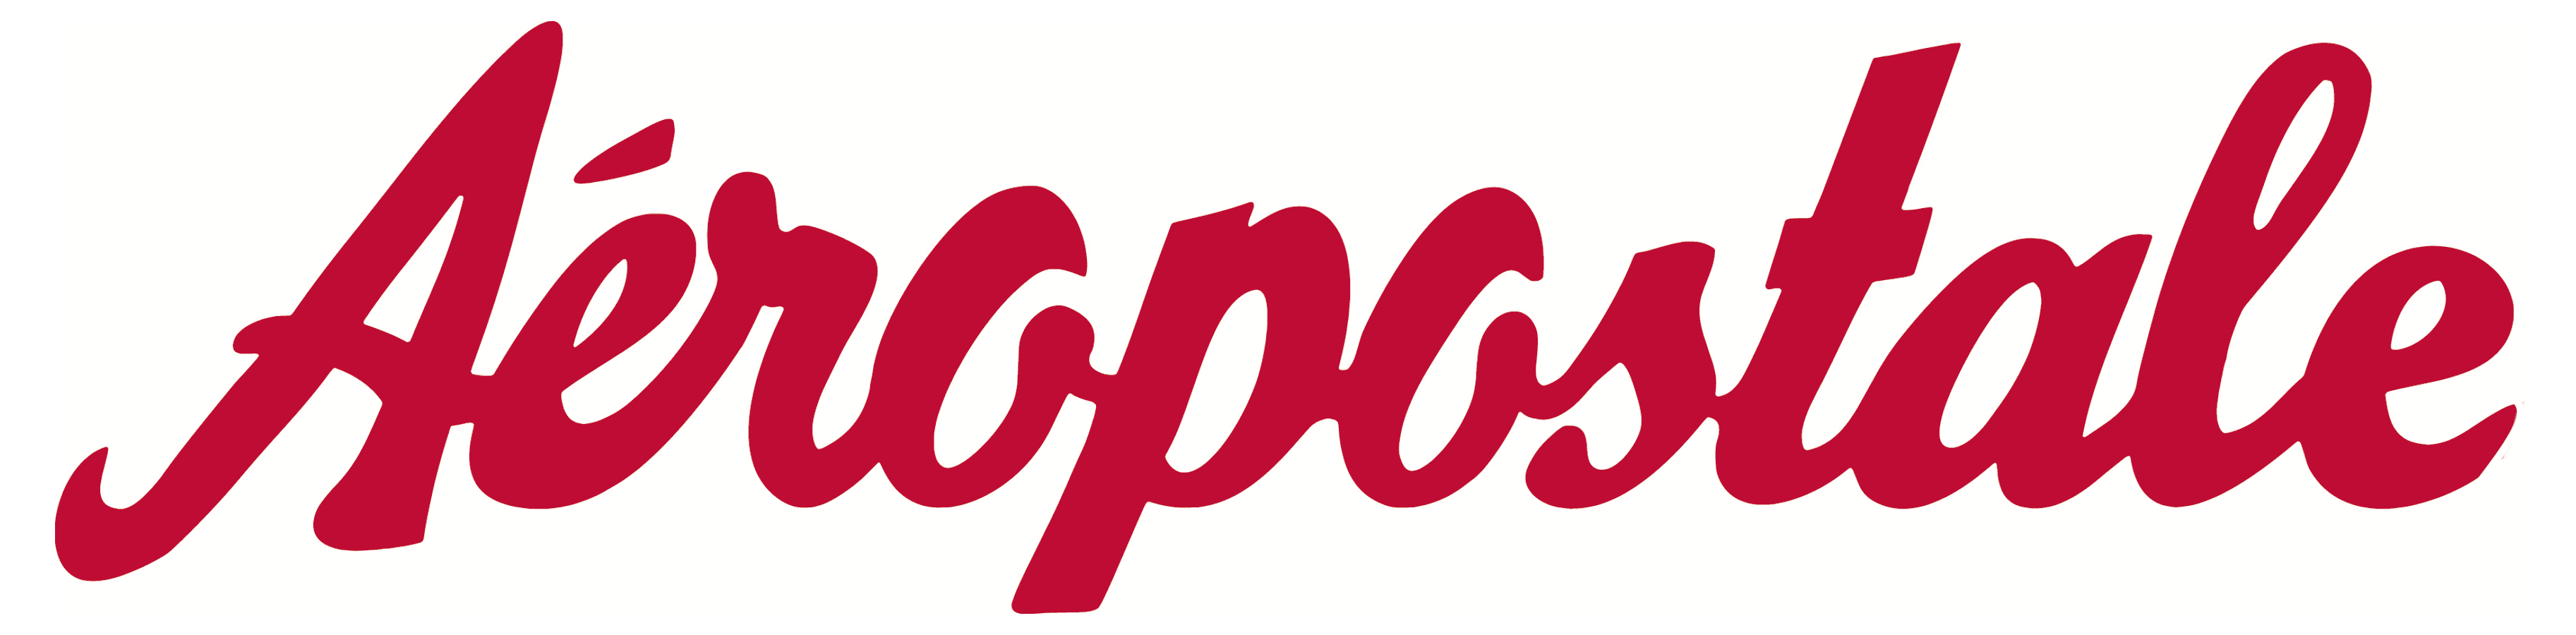 Areopostle Logo - Aeropostale – Logos Download